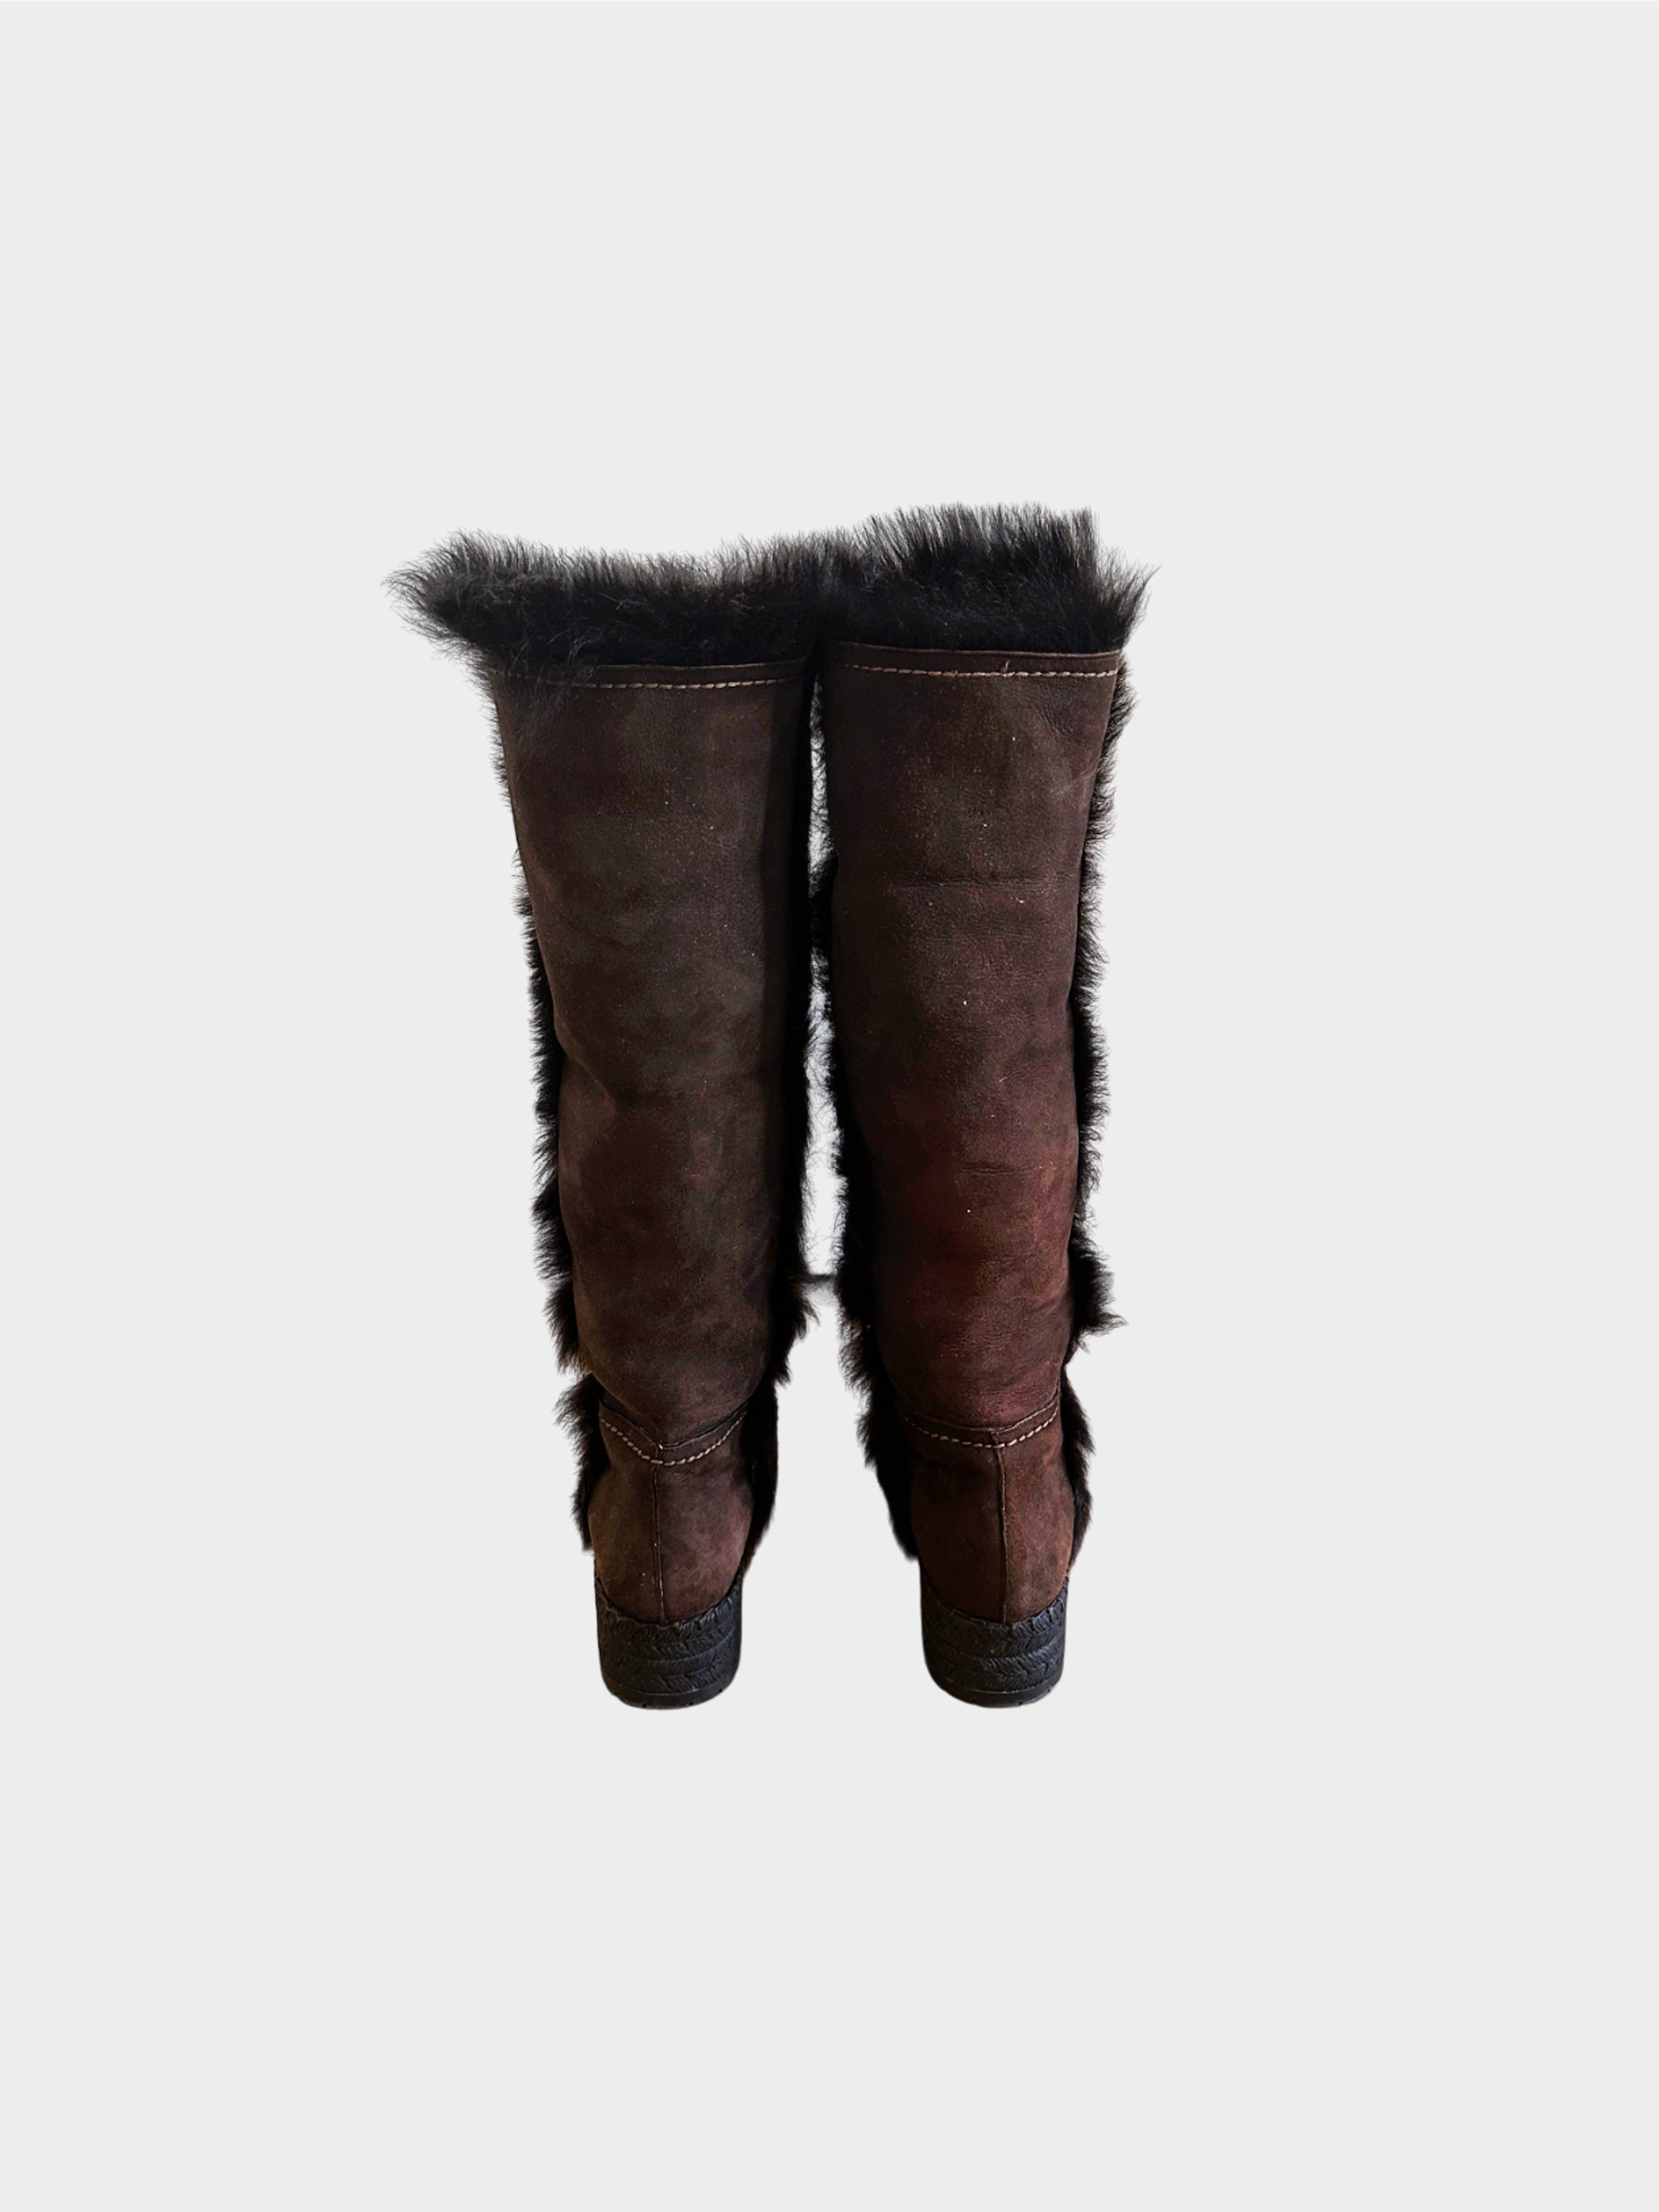 Prada 2000s Fur Lined Suede Knee Boots